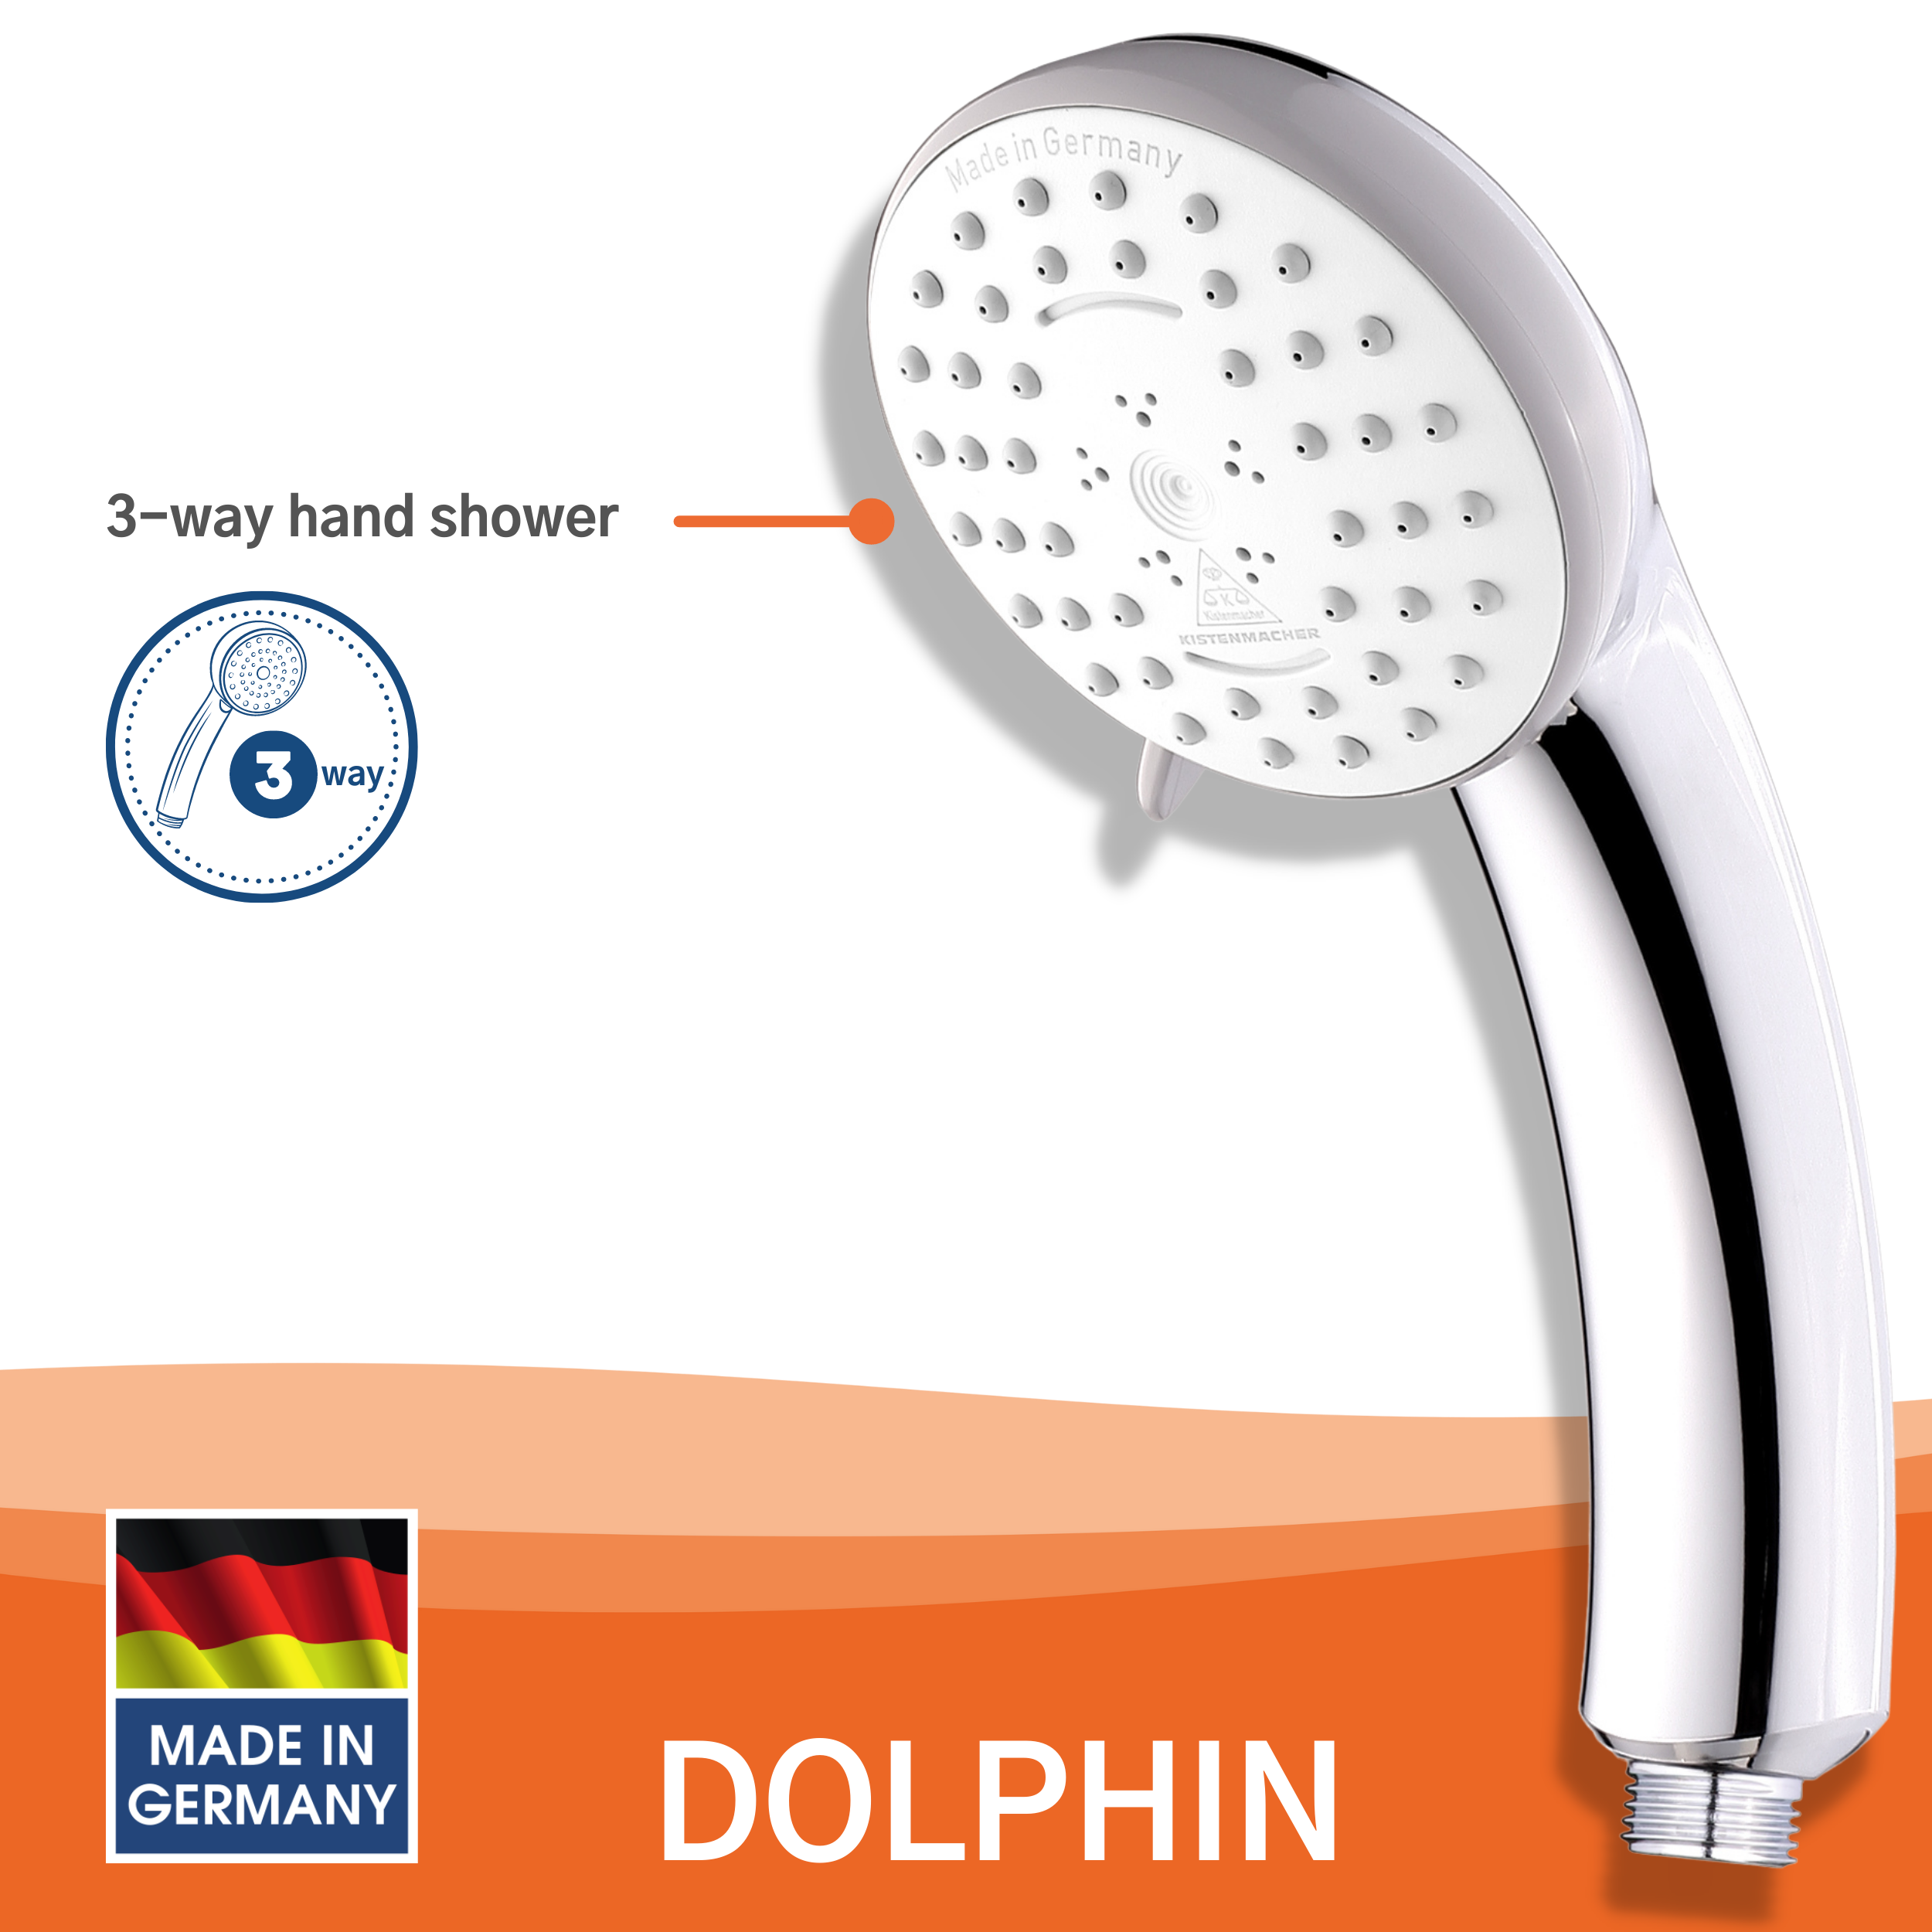 Hand Shower Dolphin